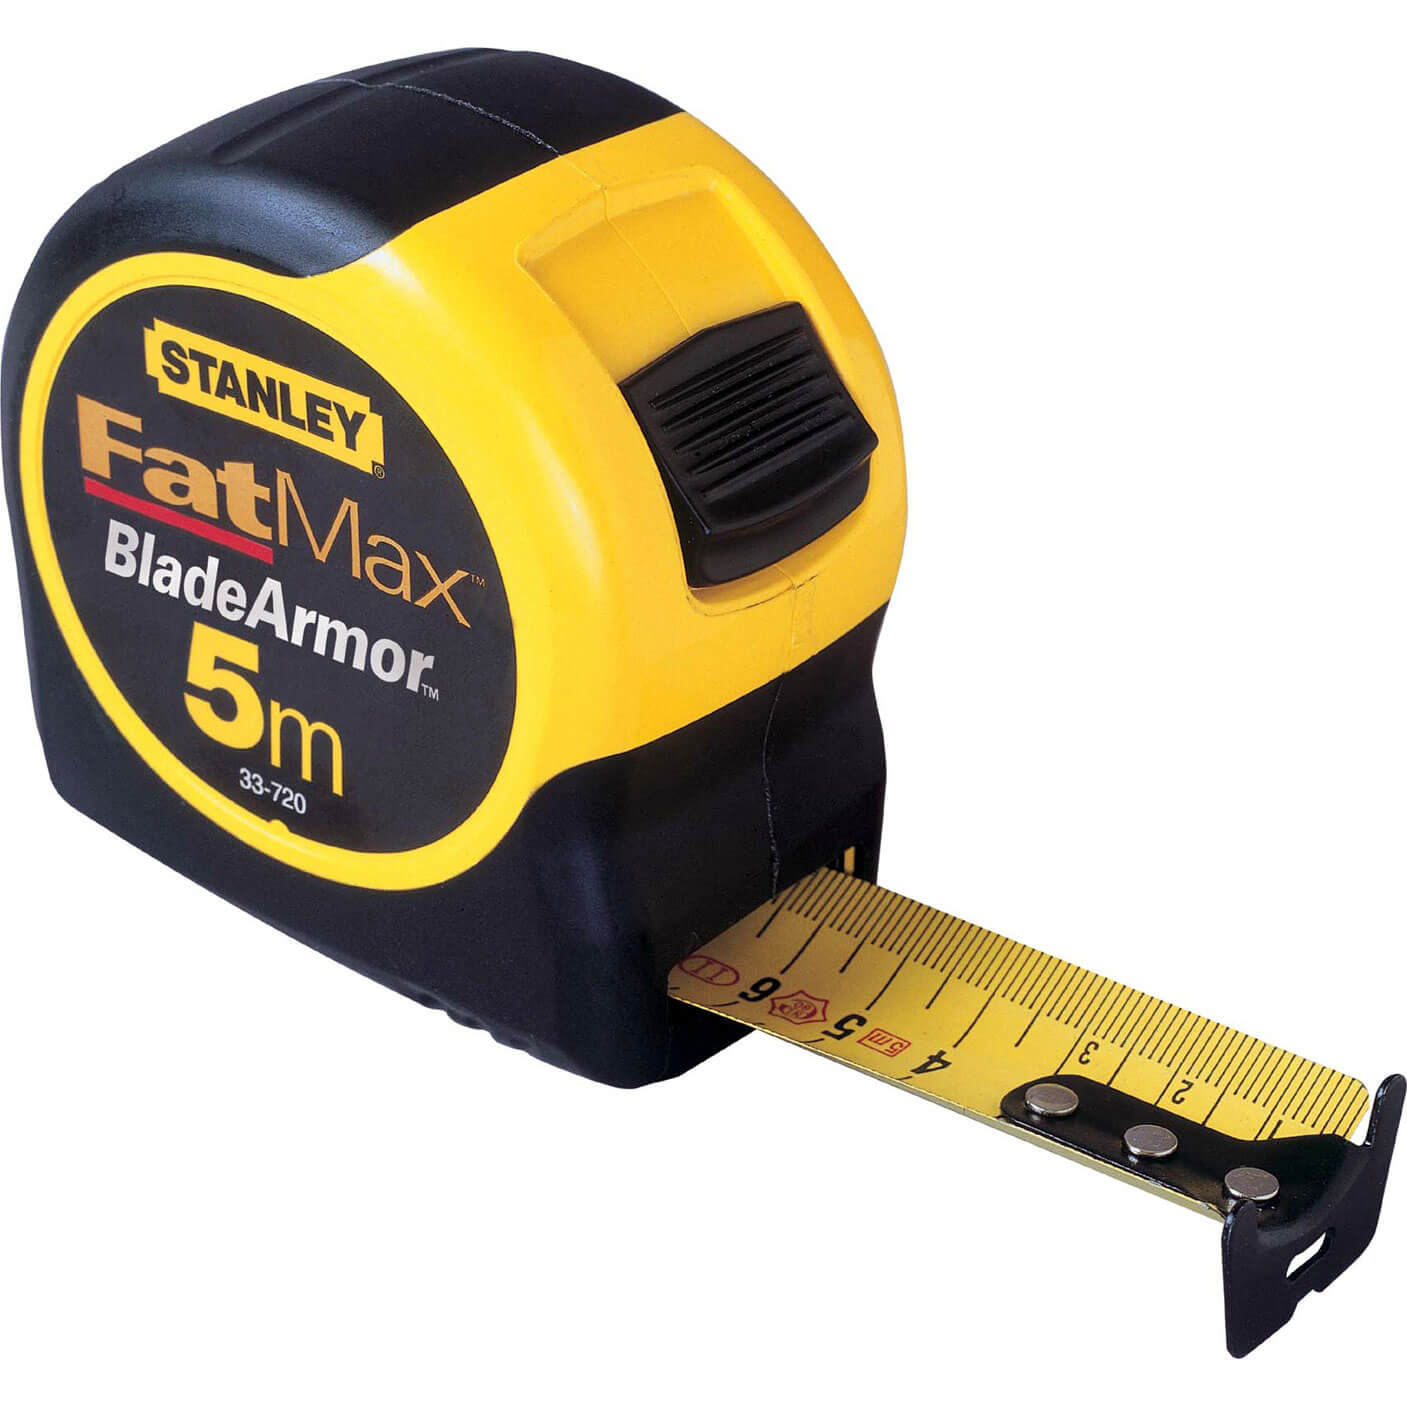 Image of Stanley Fatmax Blade Armor Tape Measure Metric 5m 32mm